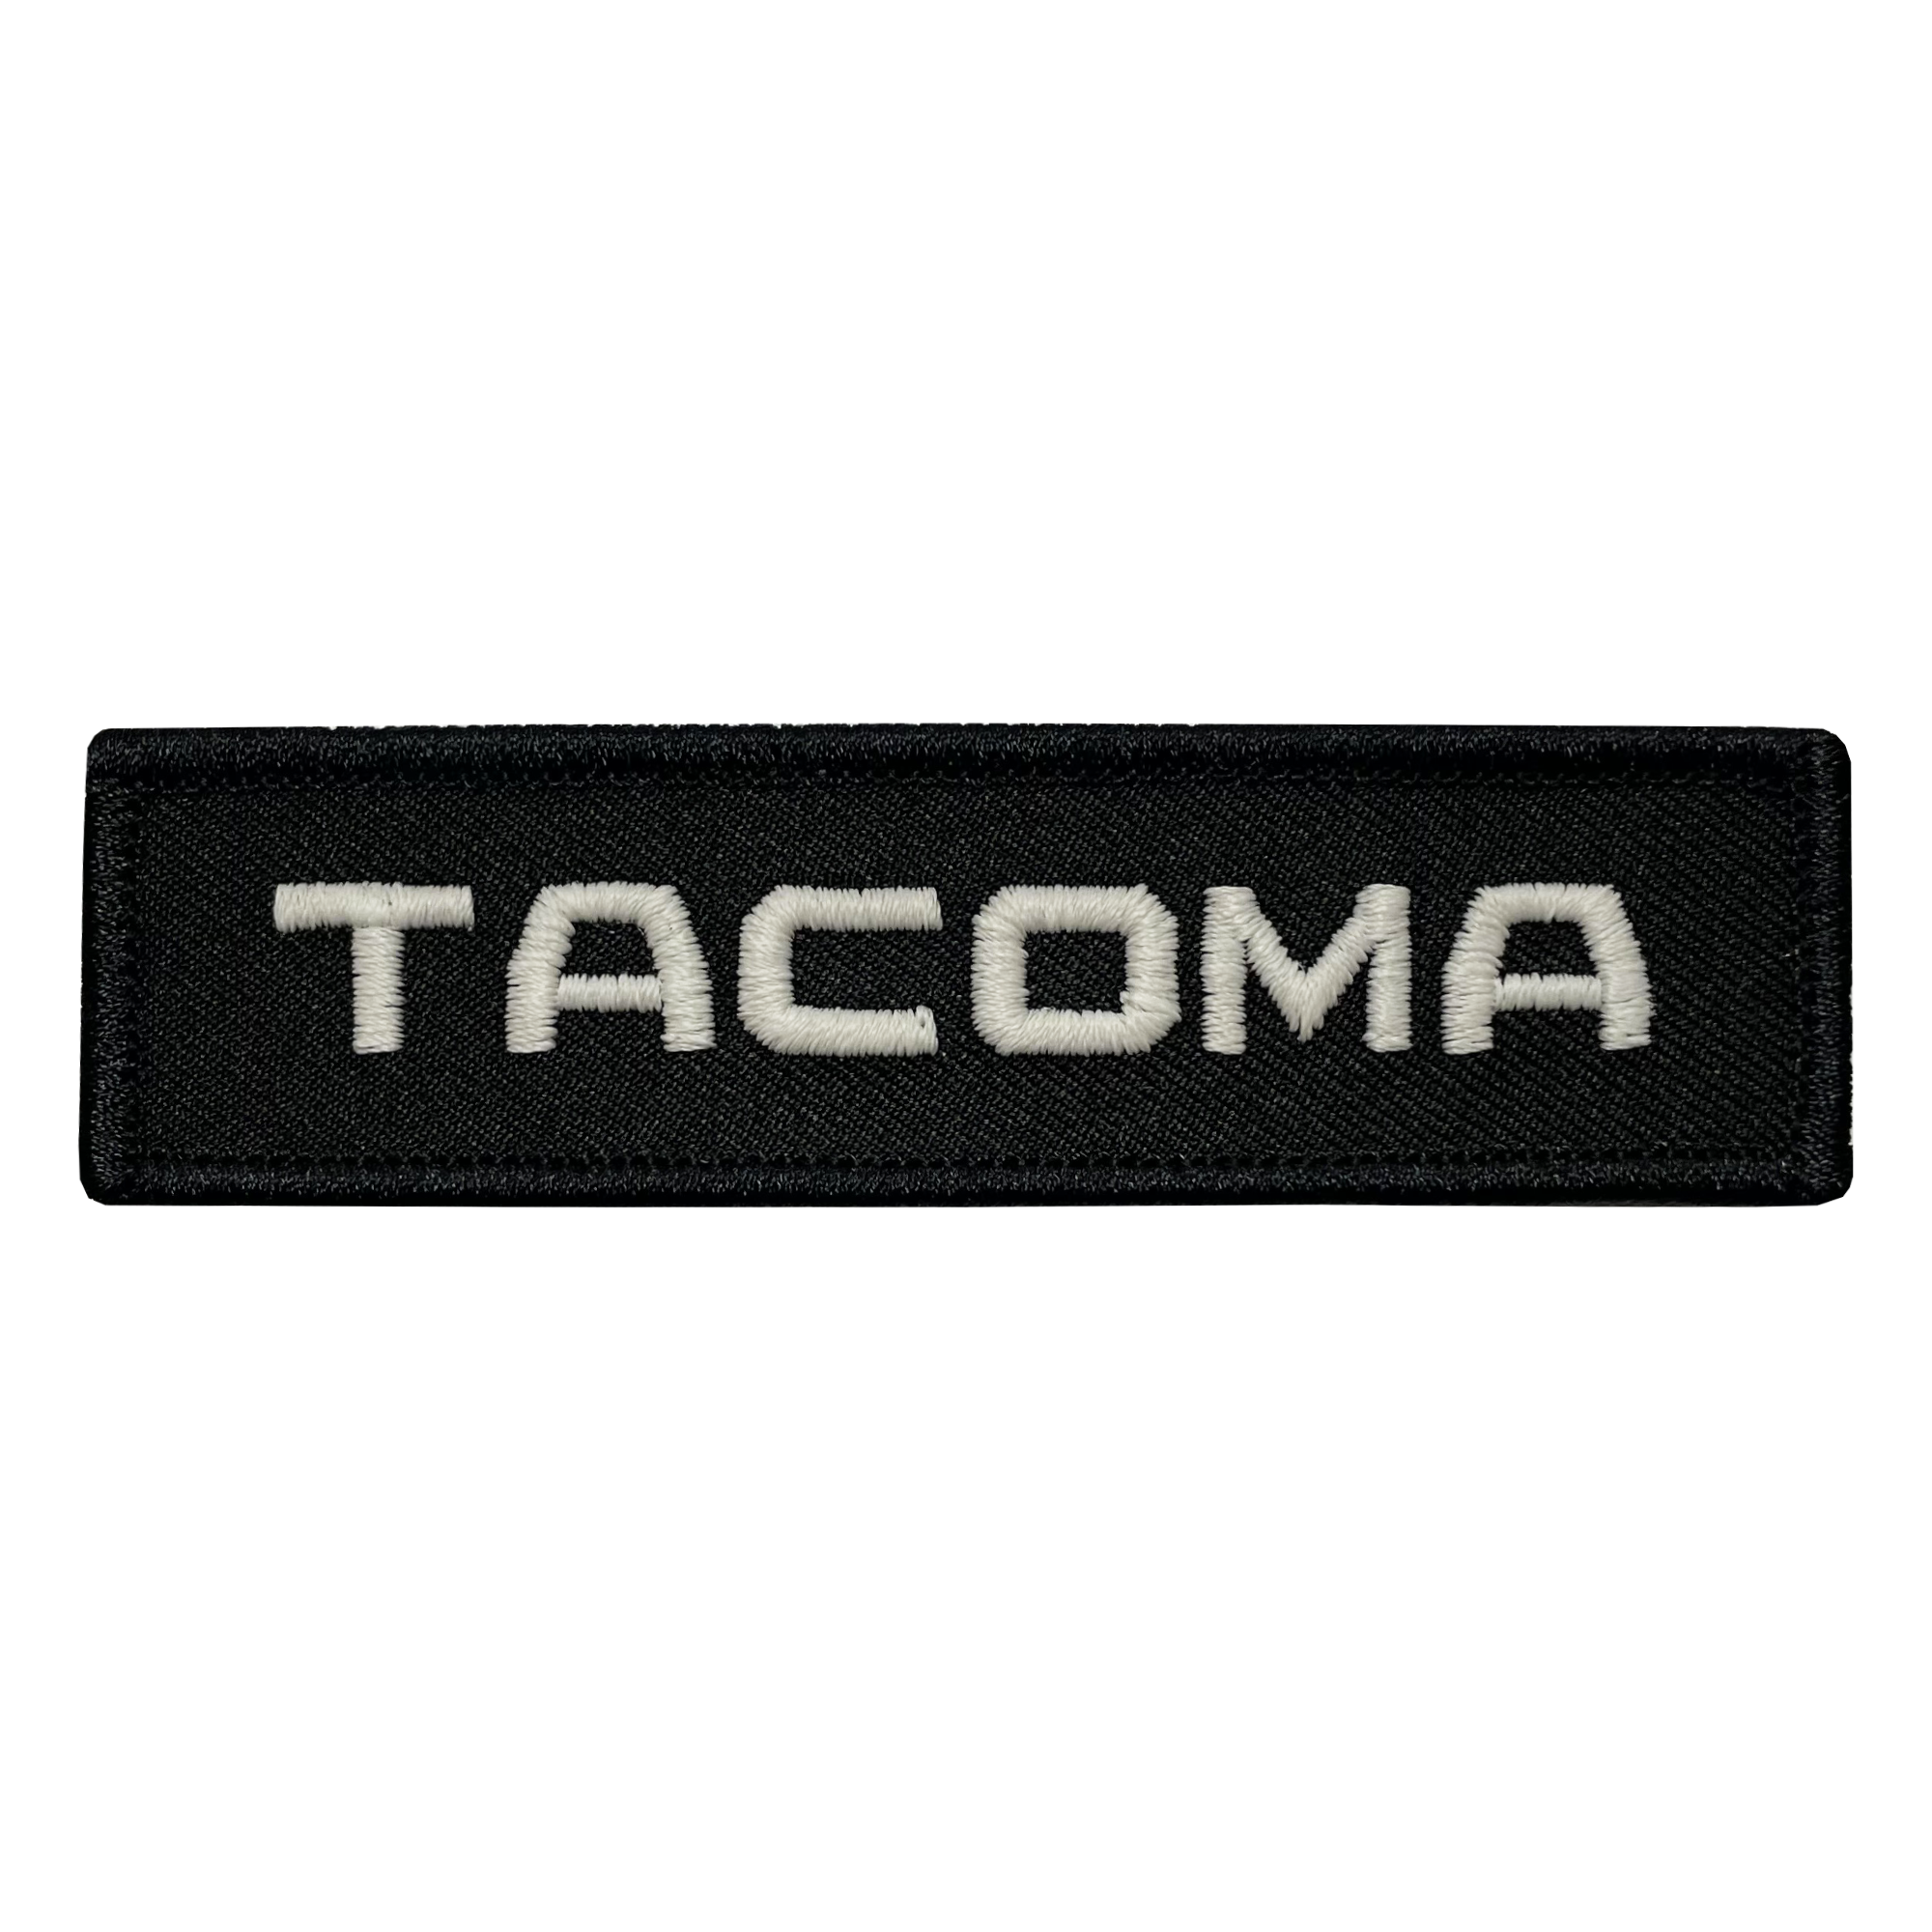 Tacoma Black Name Tape Patch - GZila Designs